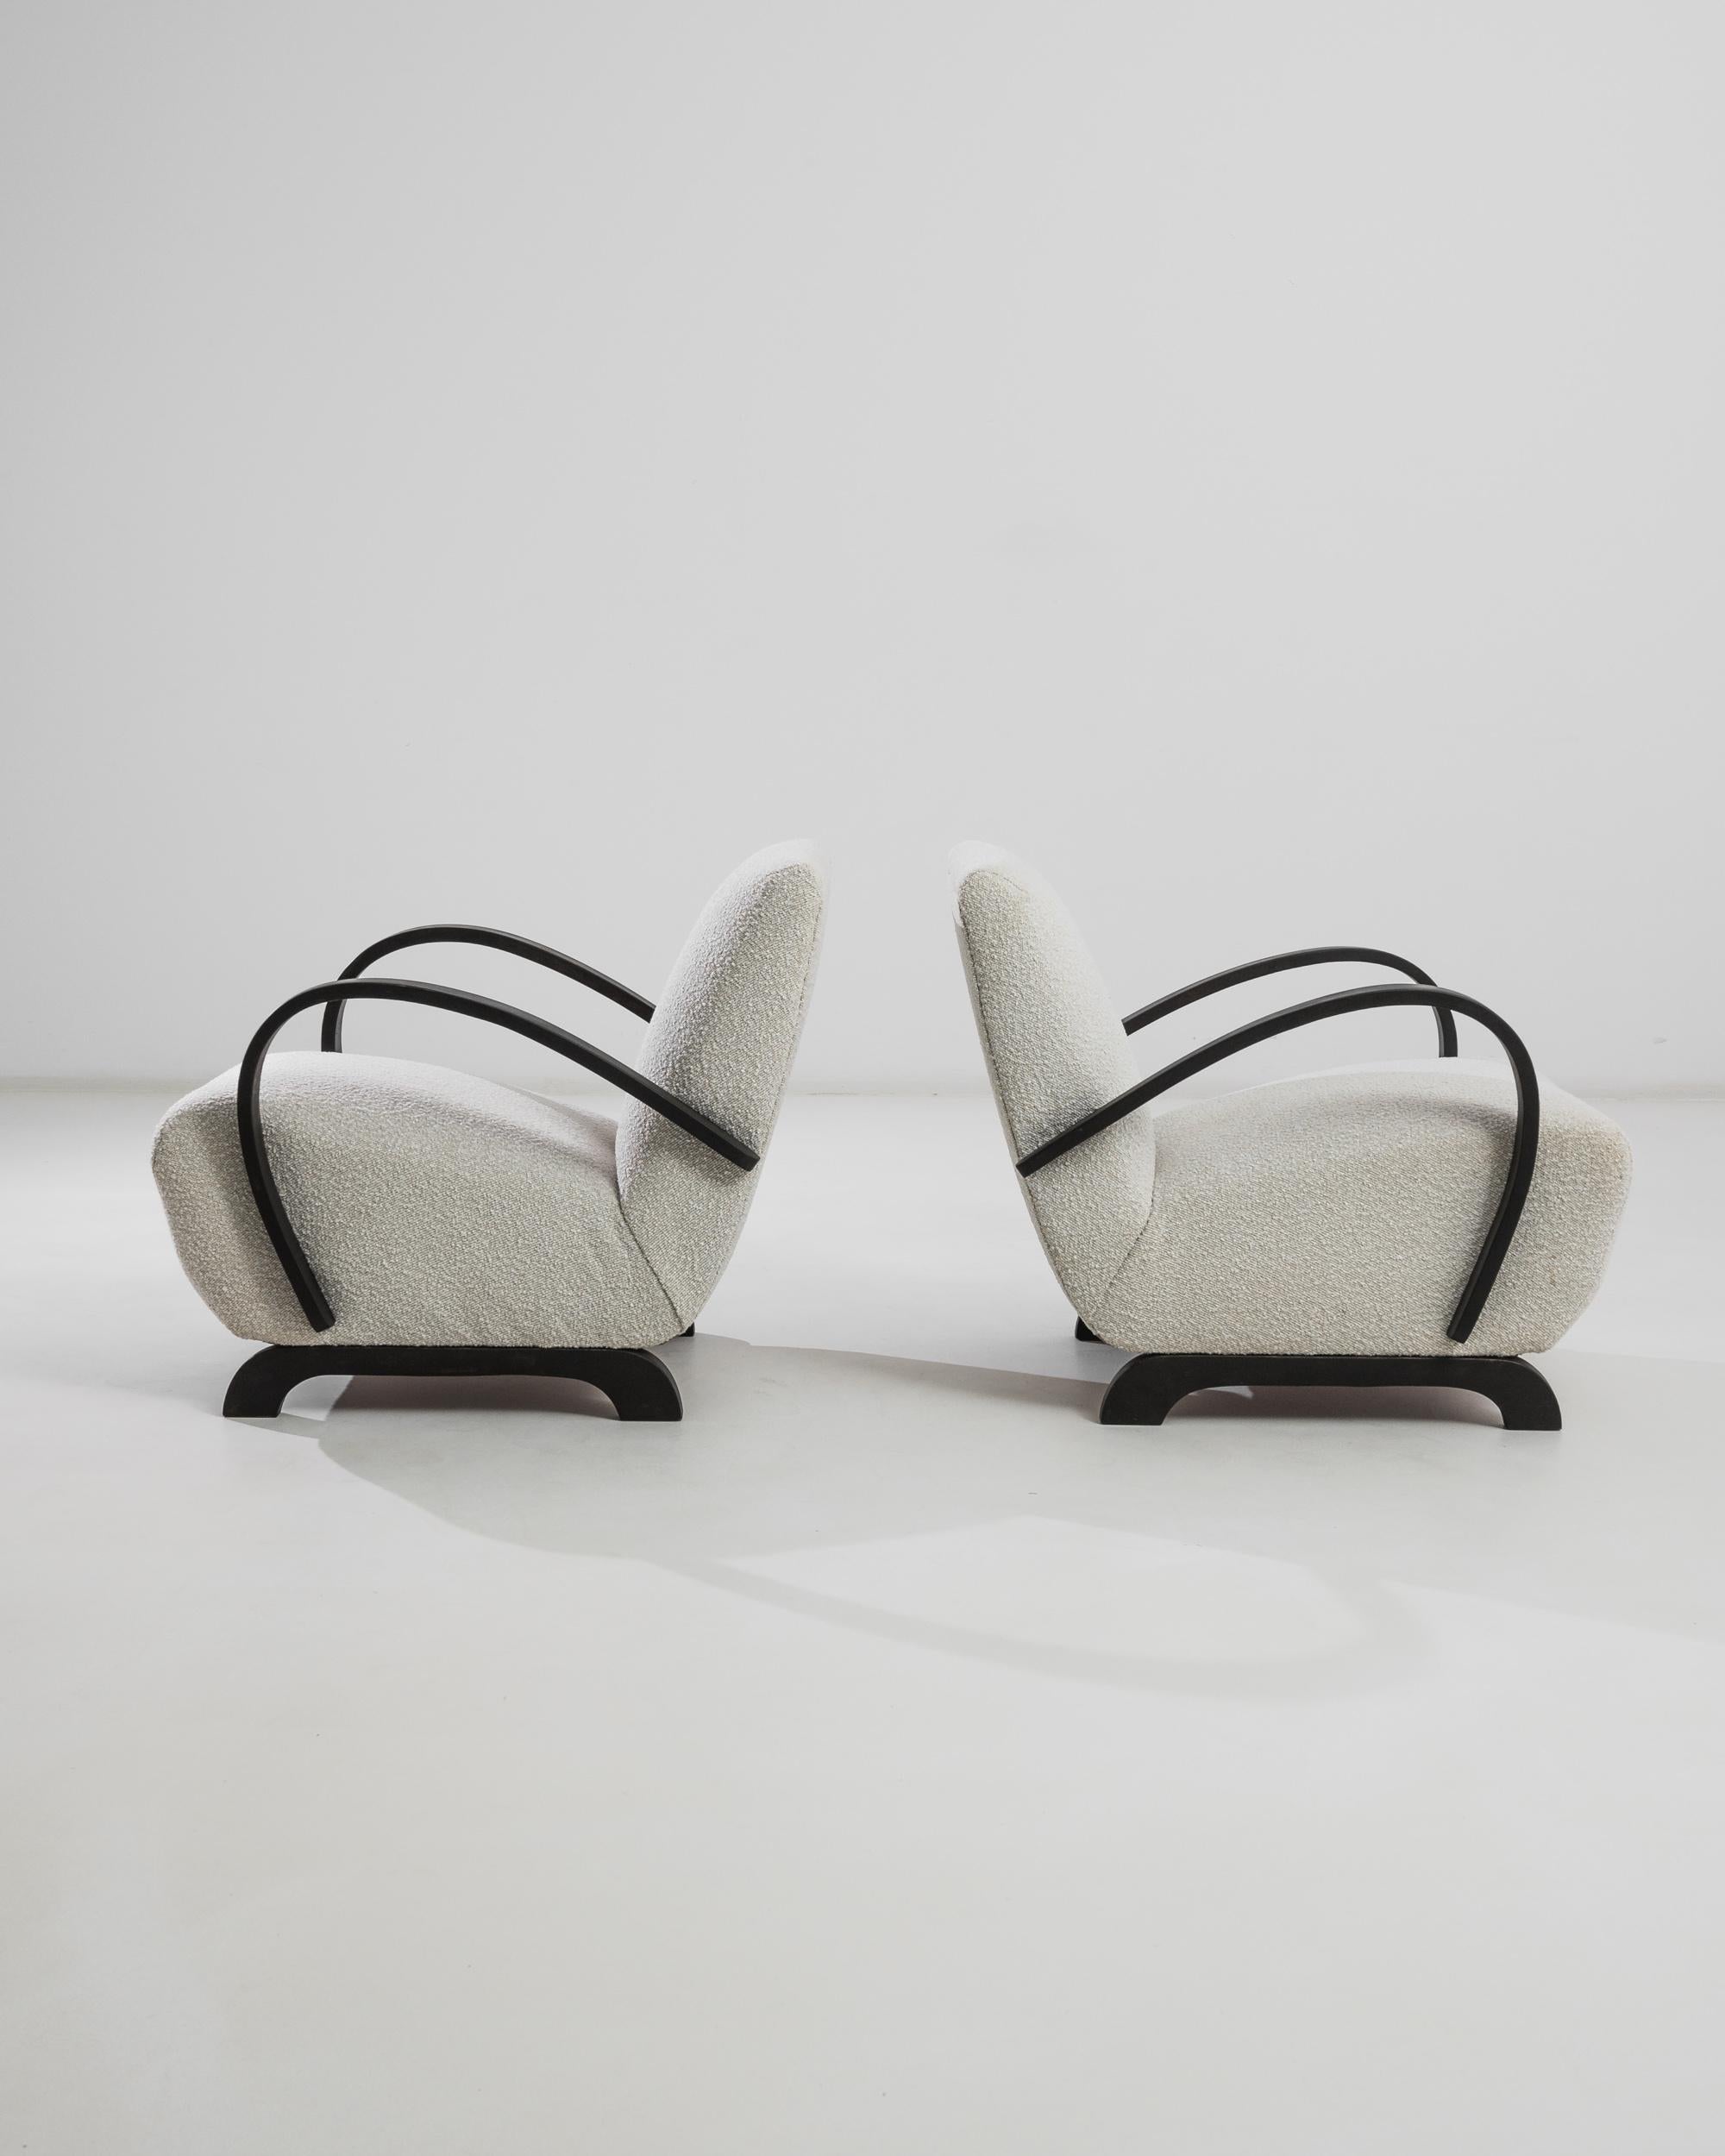 Czech Mid-Century Modern Upholstered Armchairs by J. Halabala, a Pair